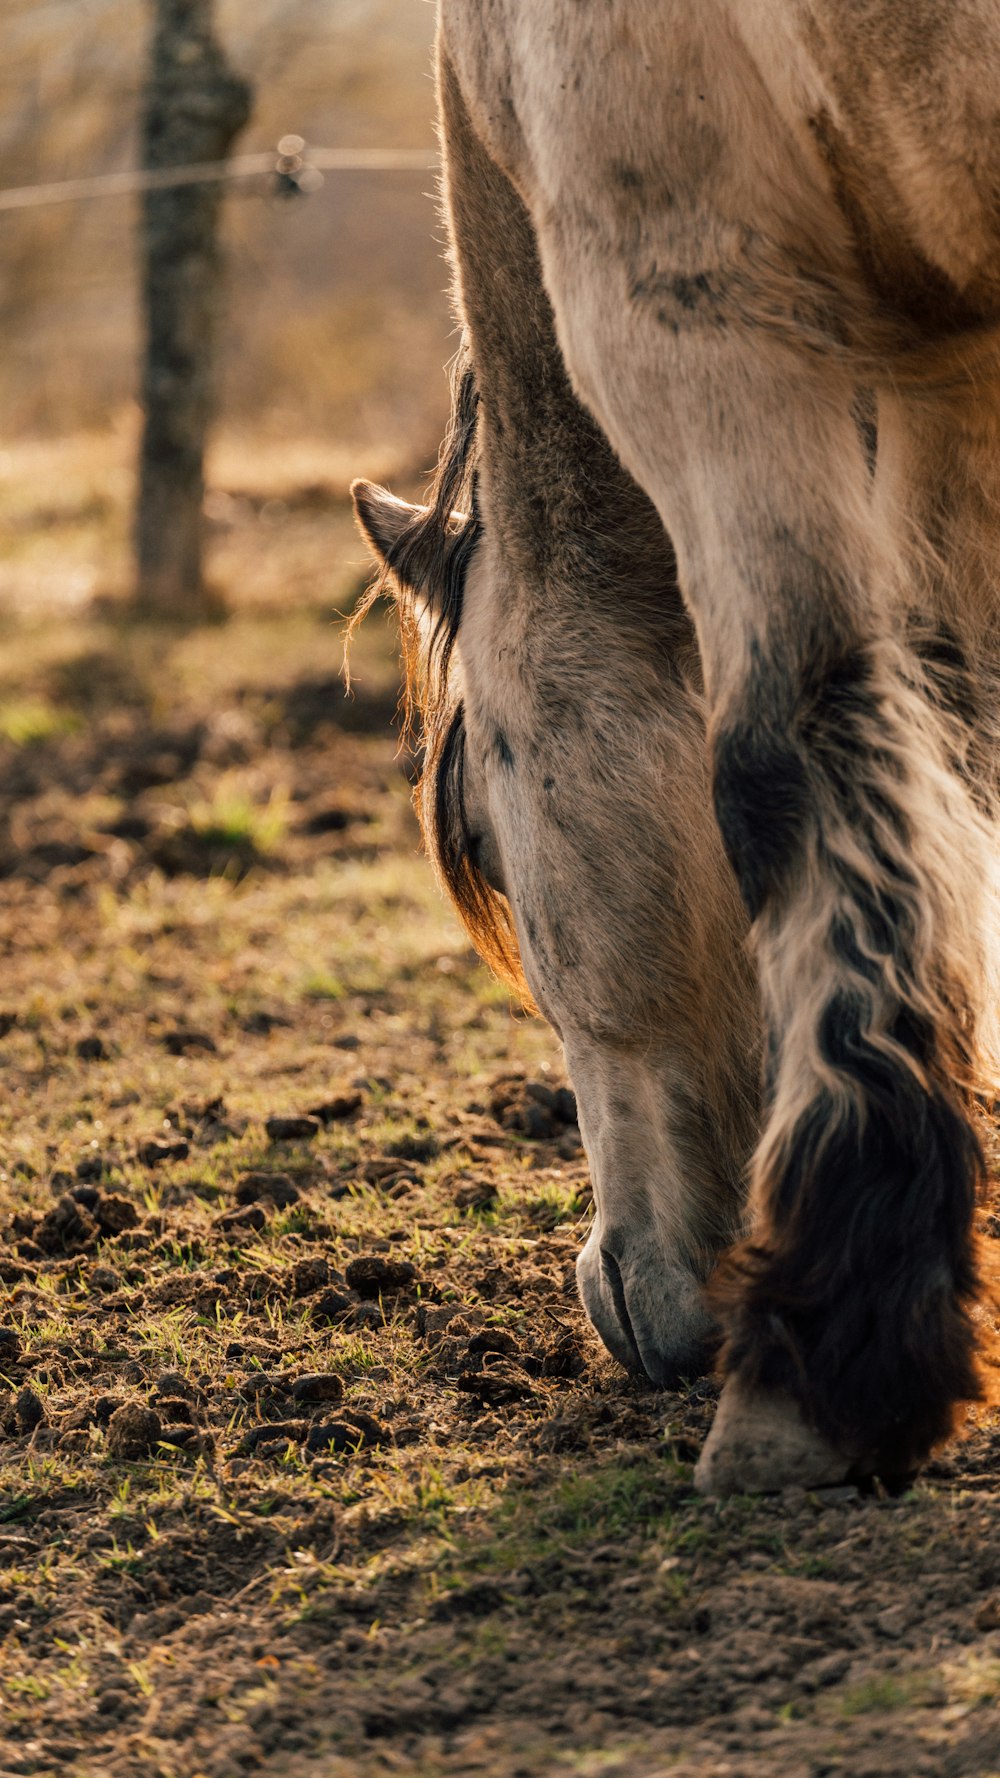 a close up of a horse grazing in a field